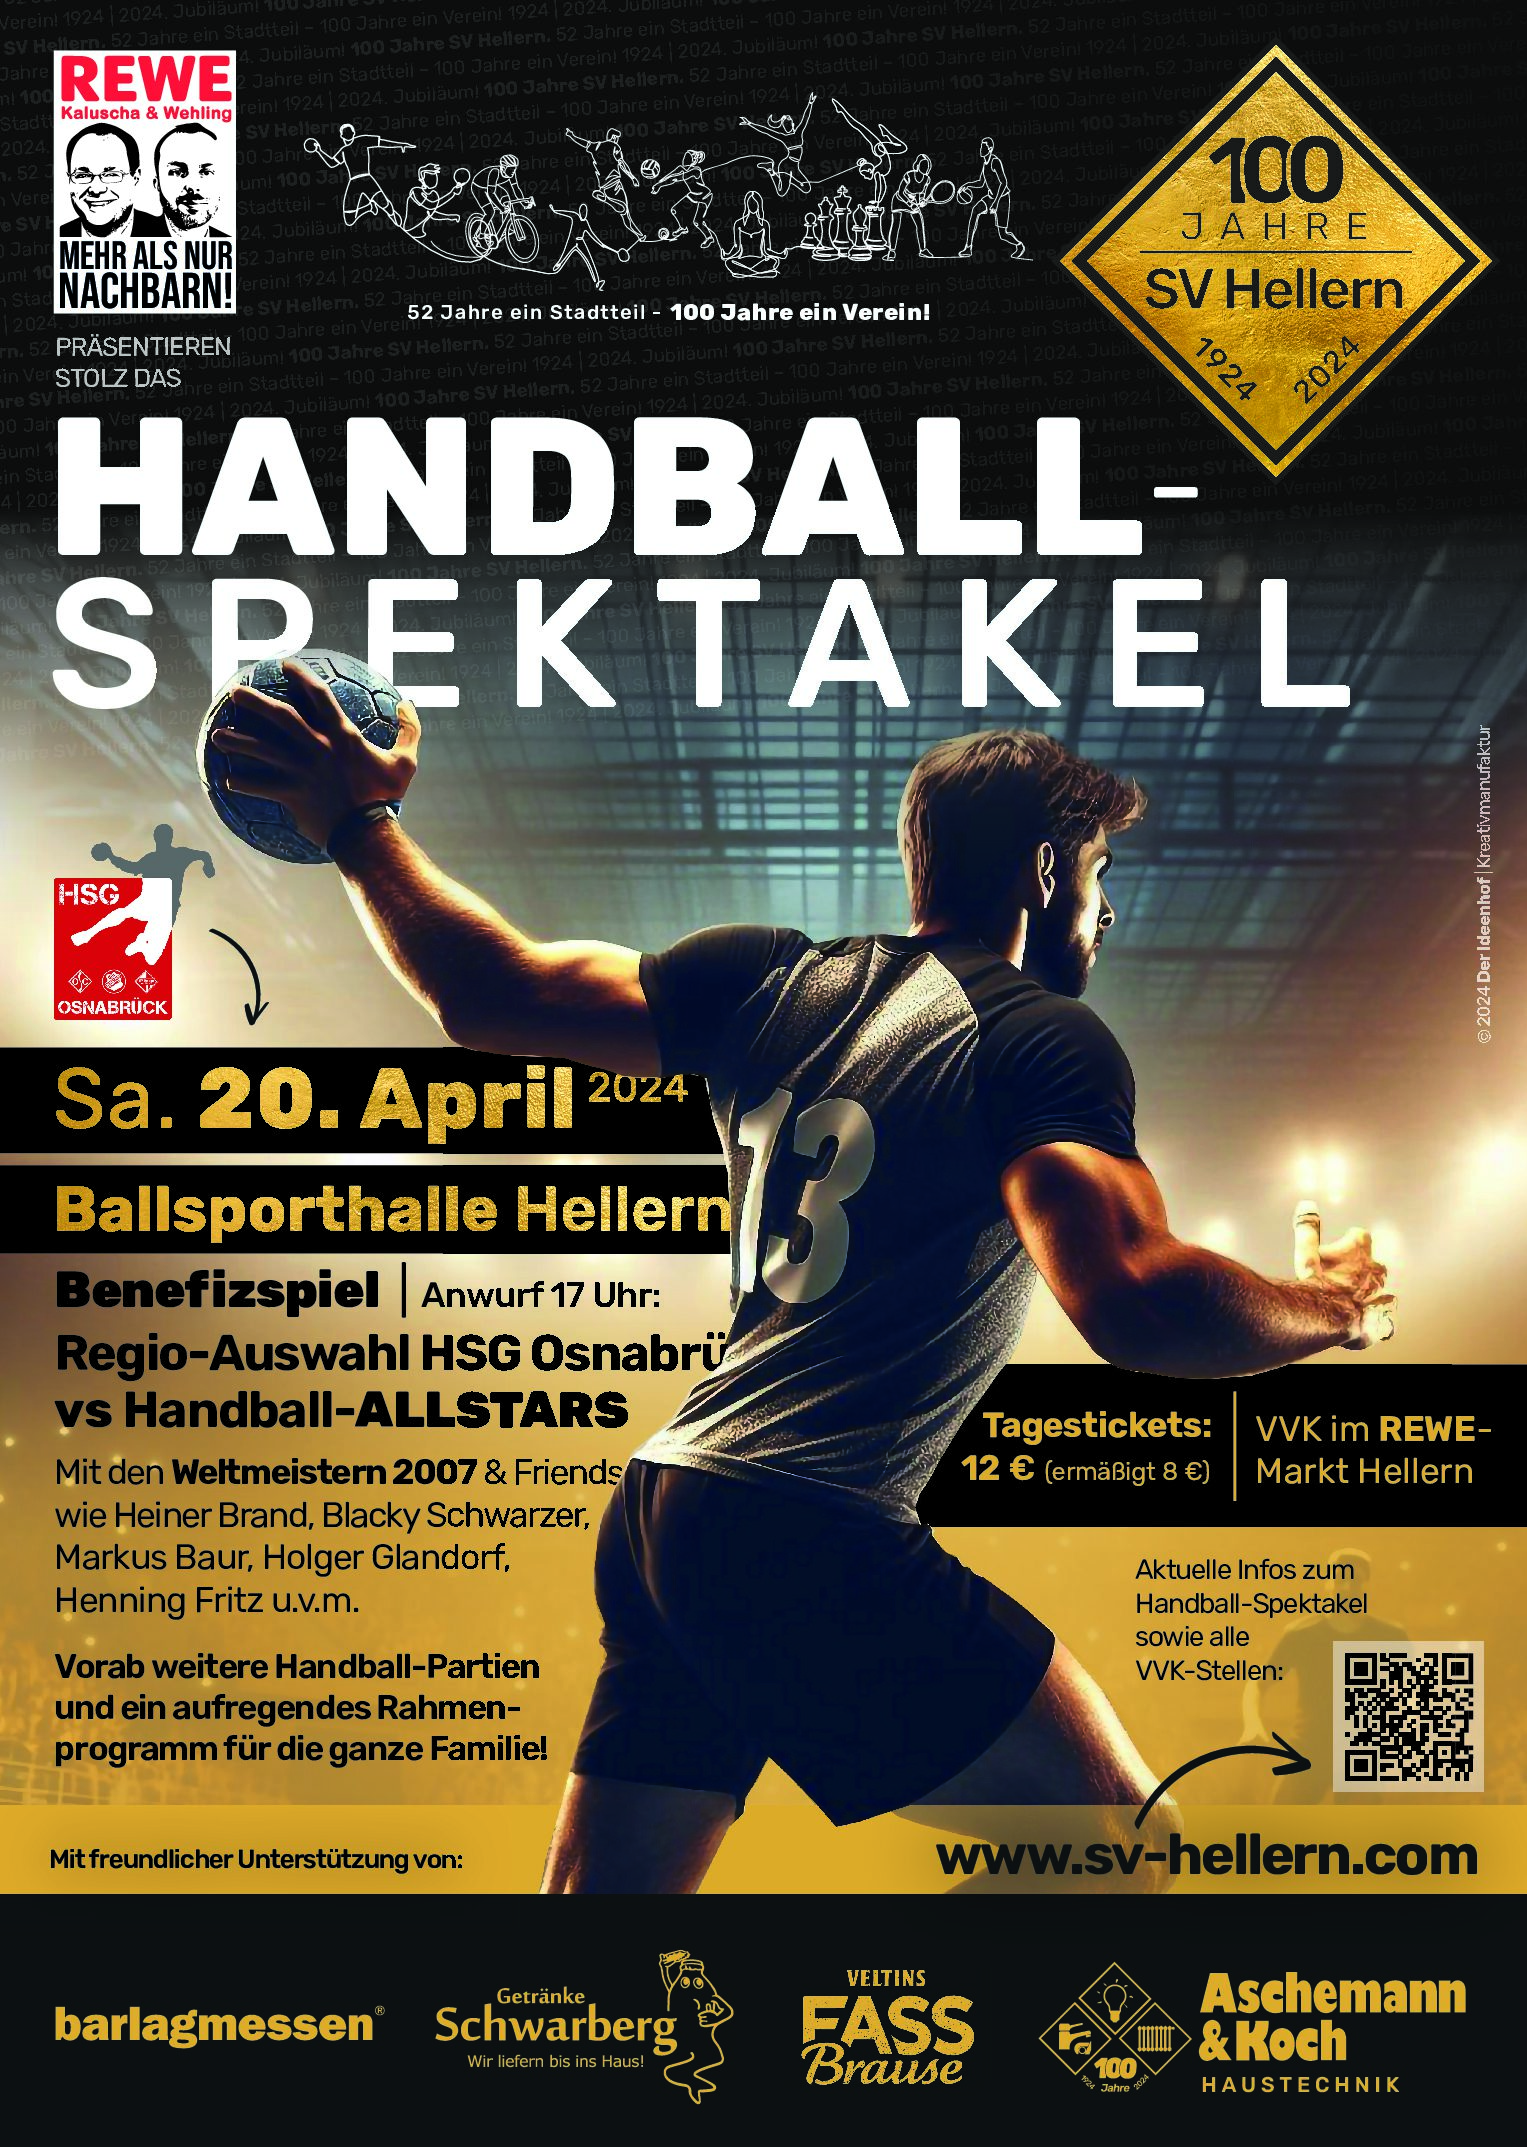 Handball-Spektakel zum Hundertsten